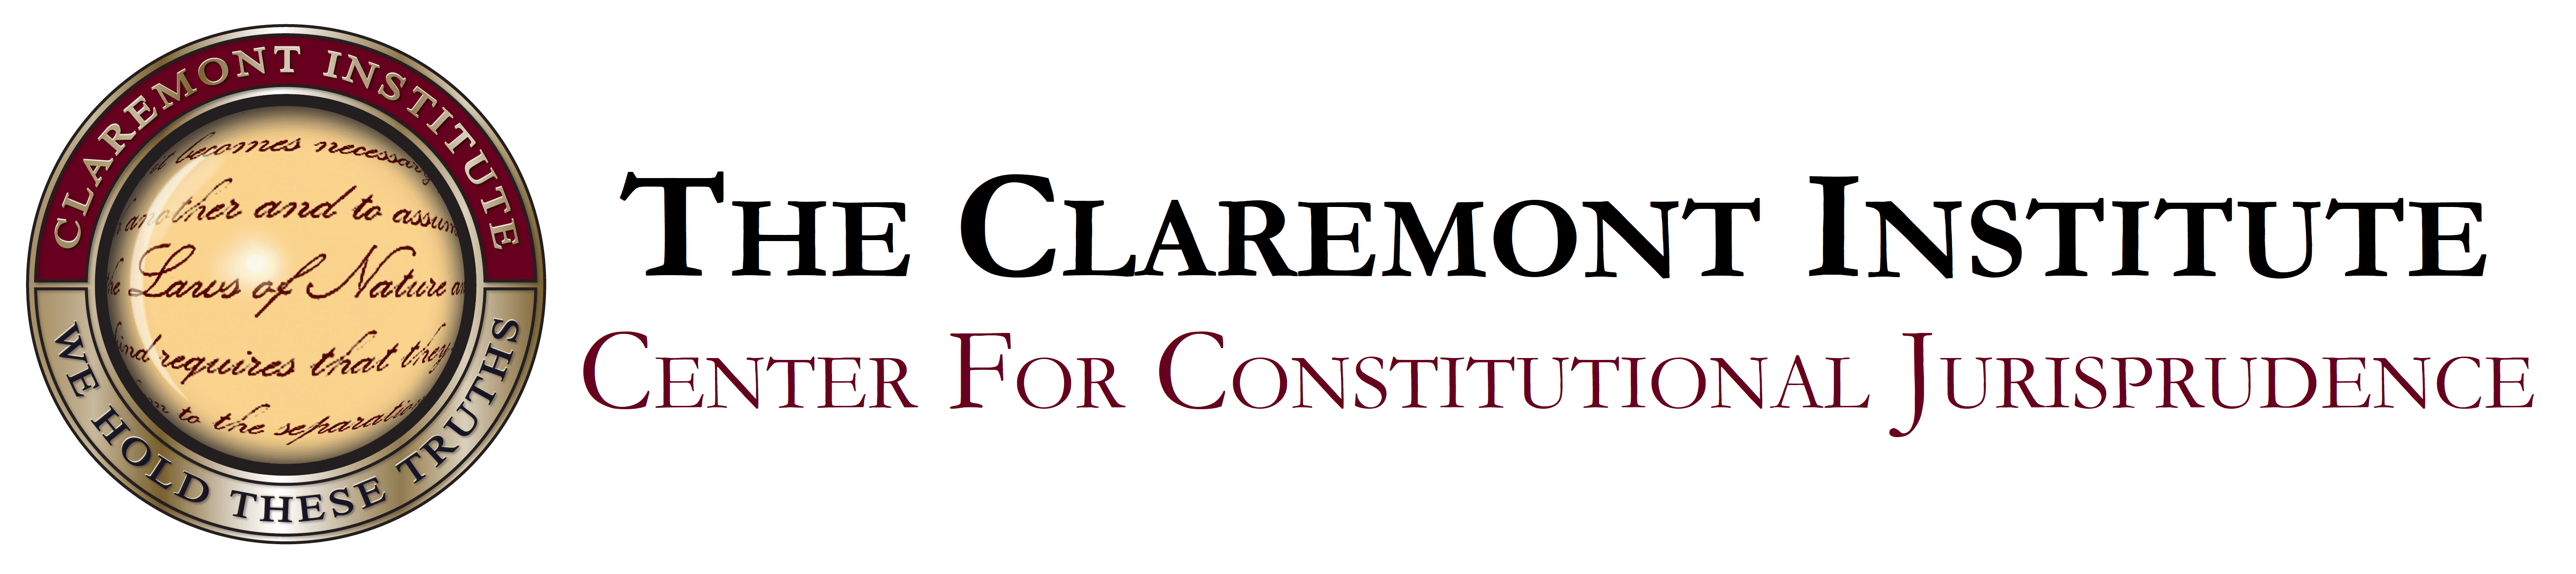 The Claremont Institute's Center for Constitutional Jurisprudence